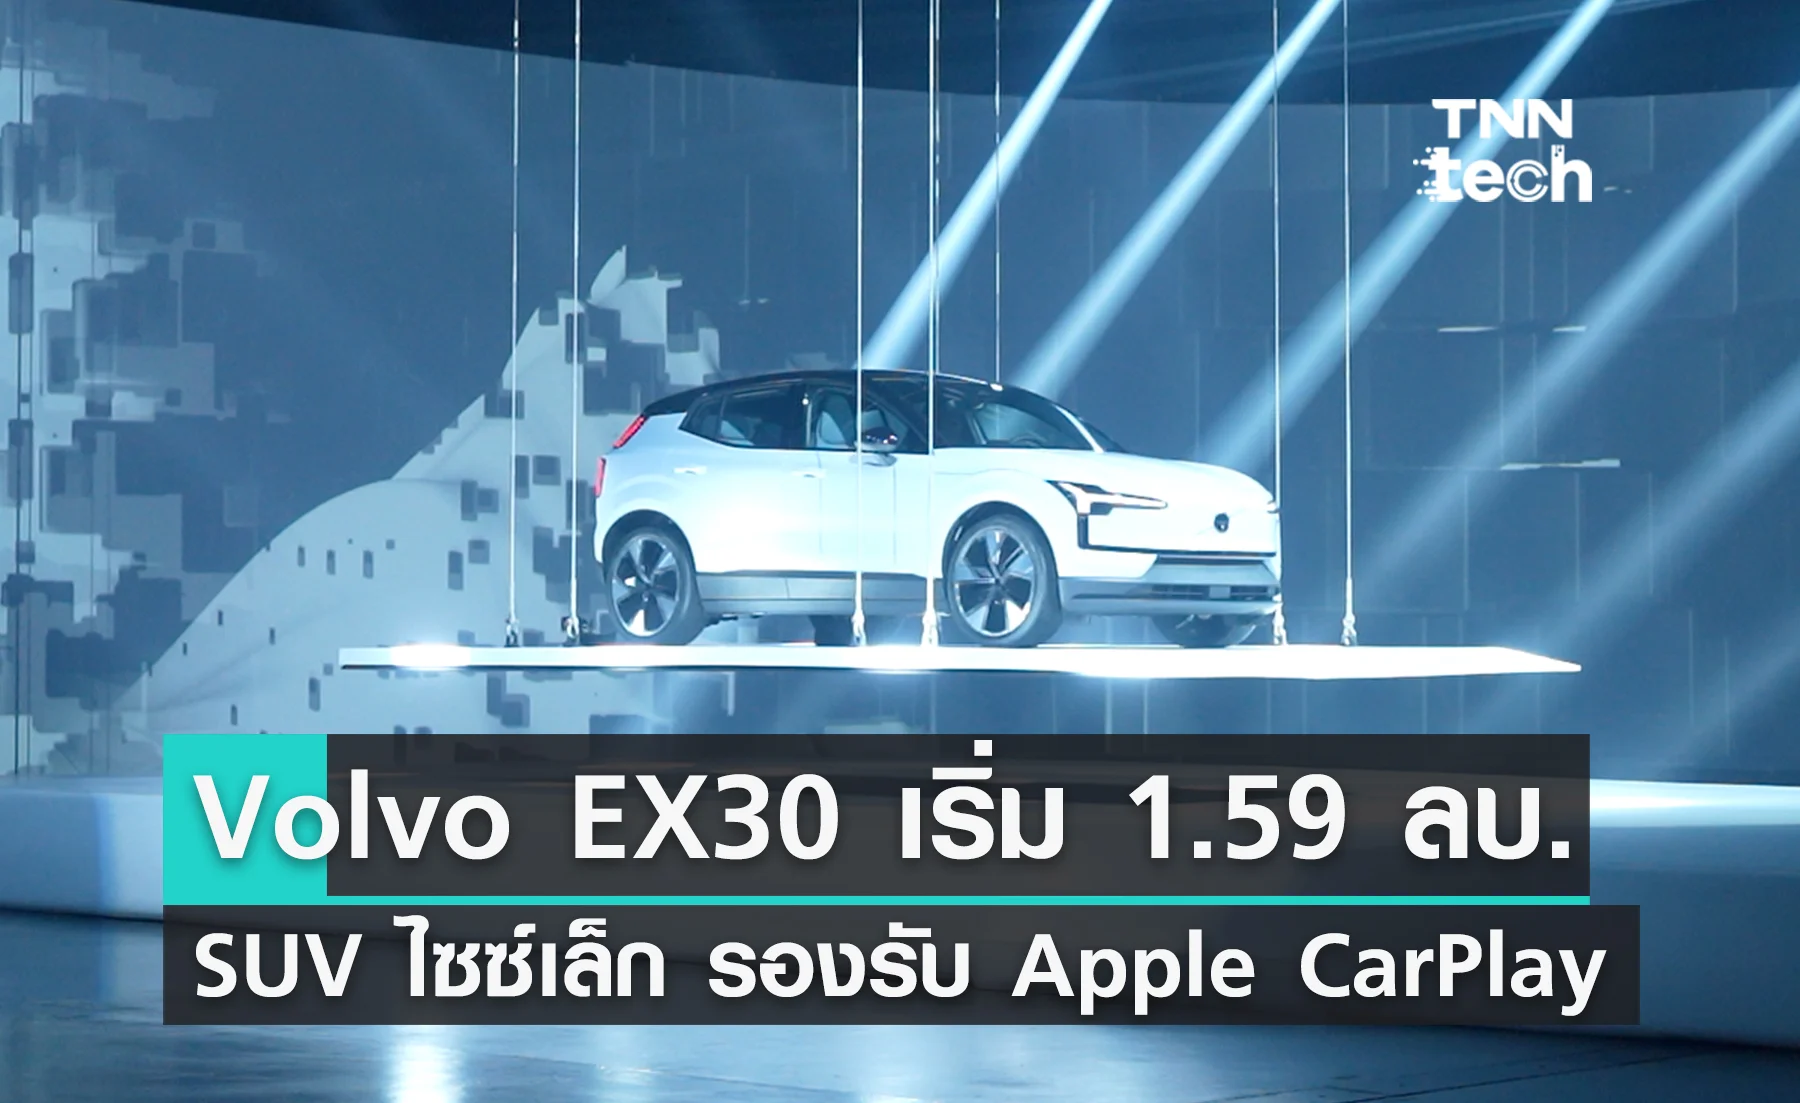 Volvo EX30 มาไทยแล้ว เริ่มต้น 1.59 ล้านบาท ไซซ์เล็ก ออปชันแน่น รองรับ Google Service และ Apple Car Play